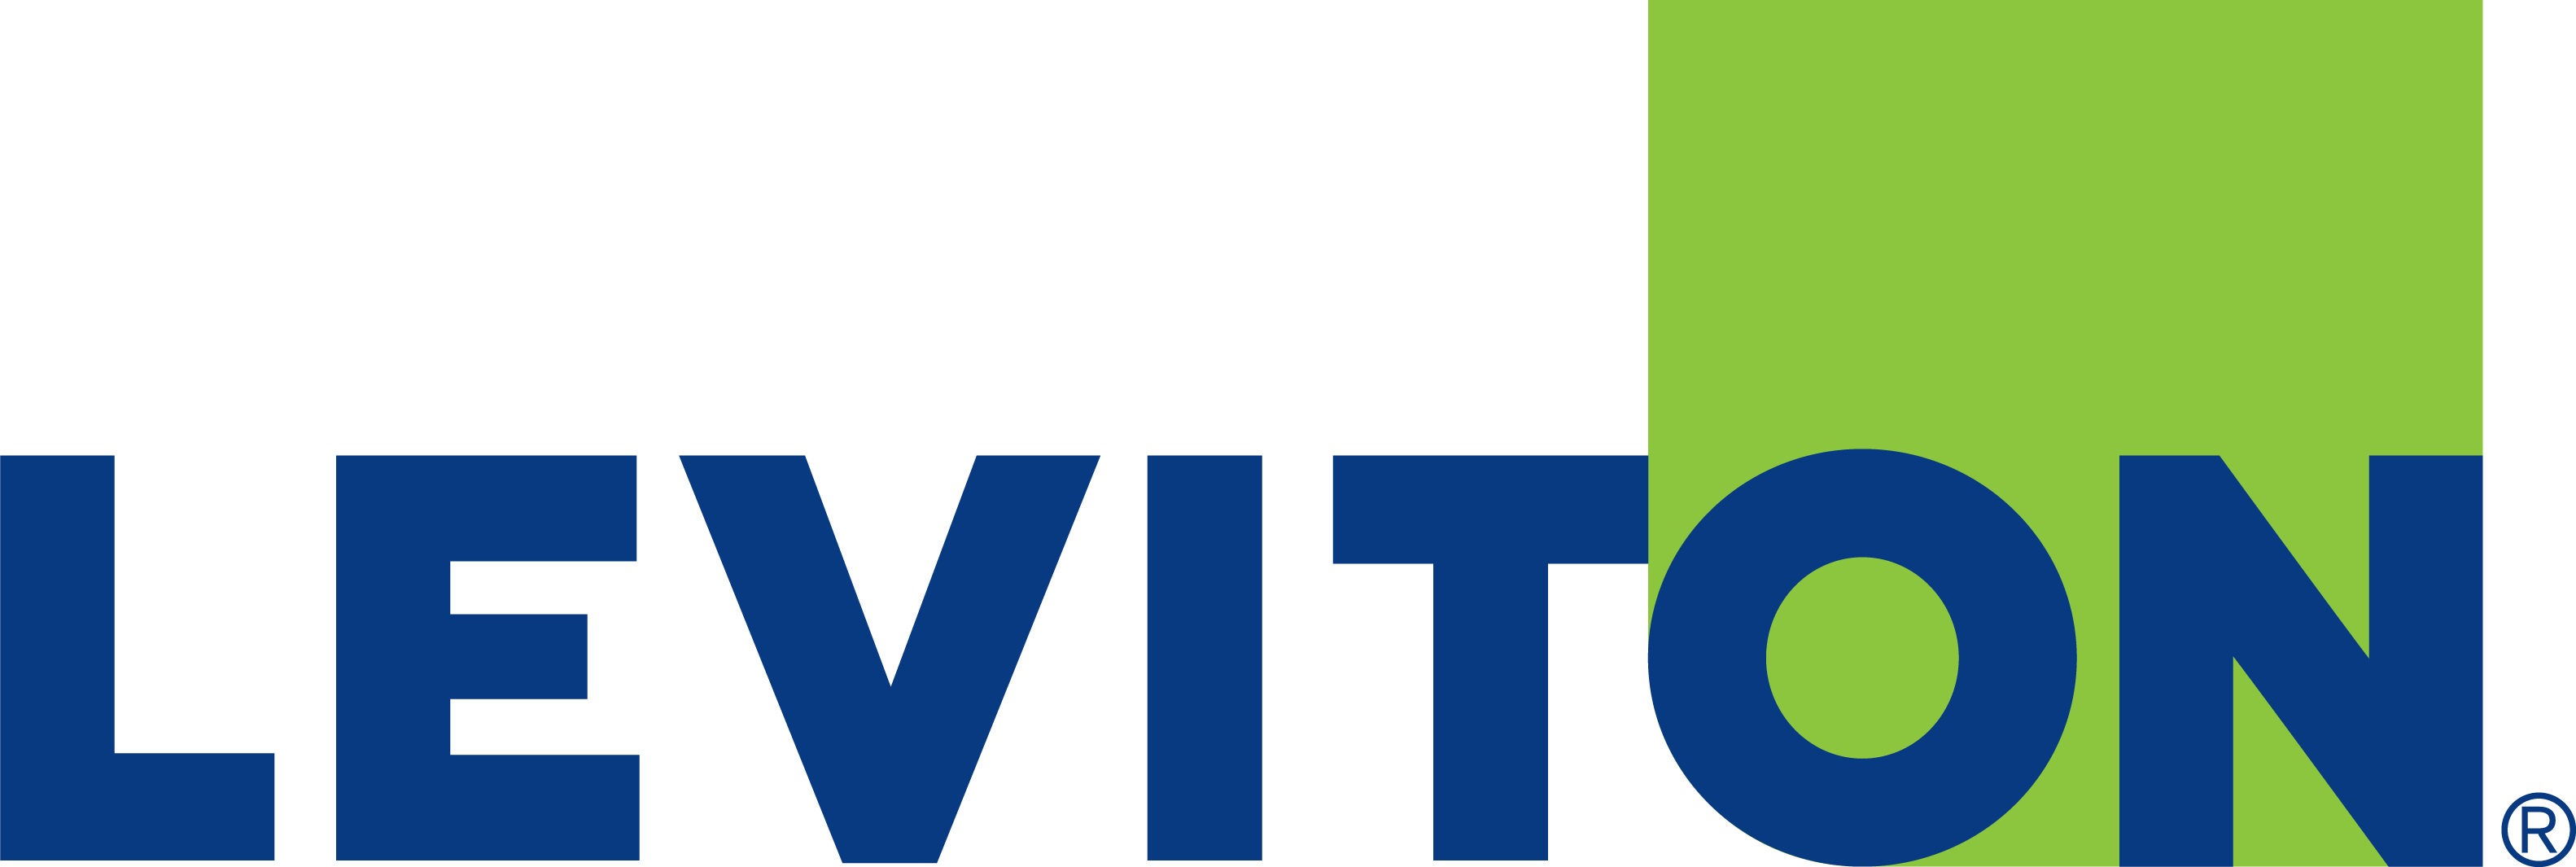 Leviton Manufacturing Co., Inc.  logo